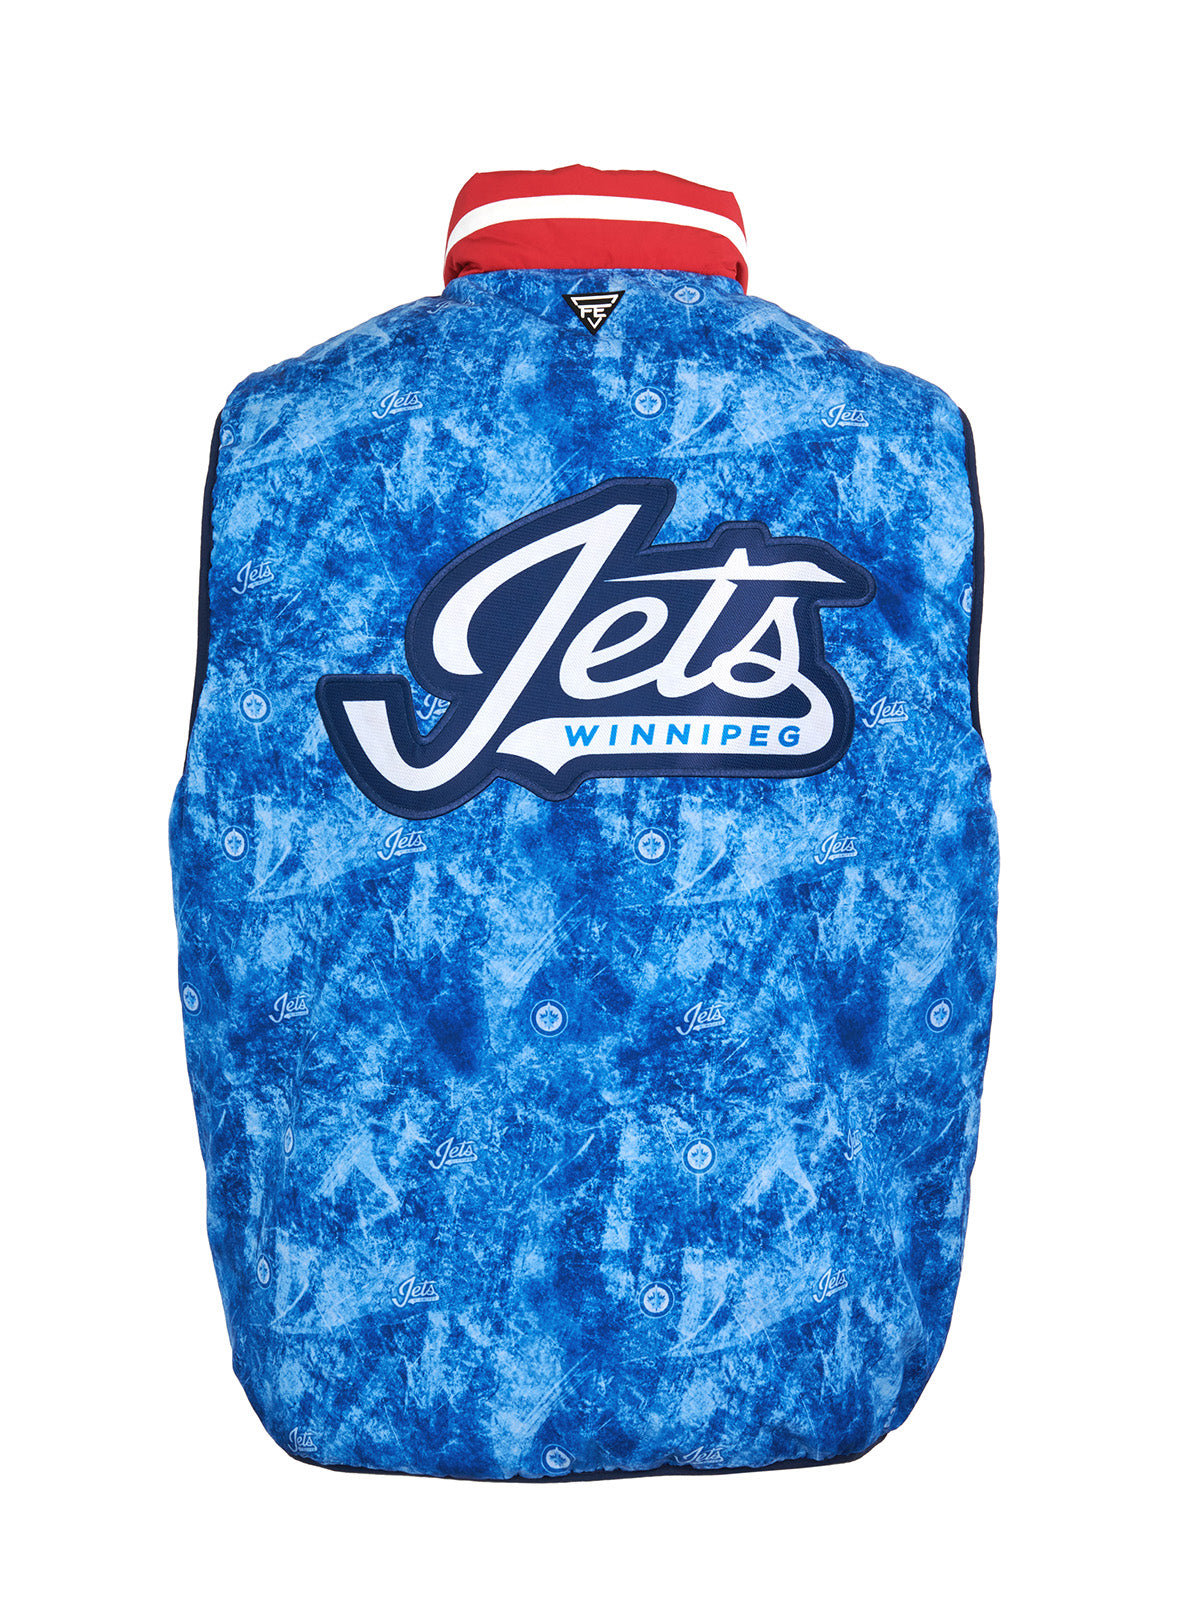 Winnipeg Jets Reversible Vest